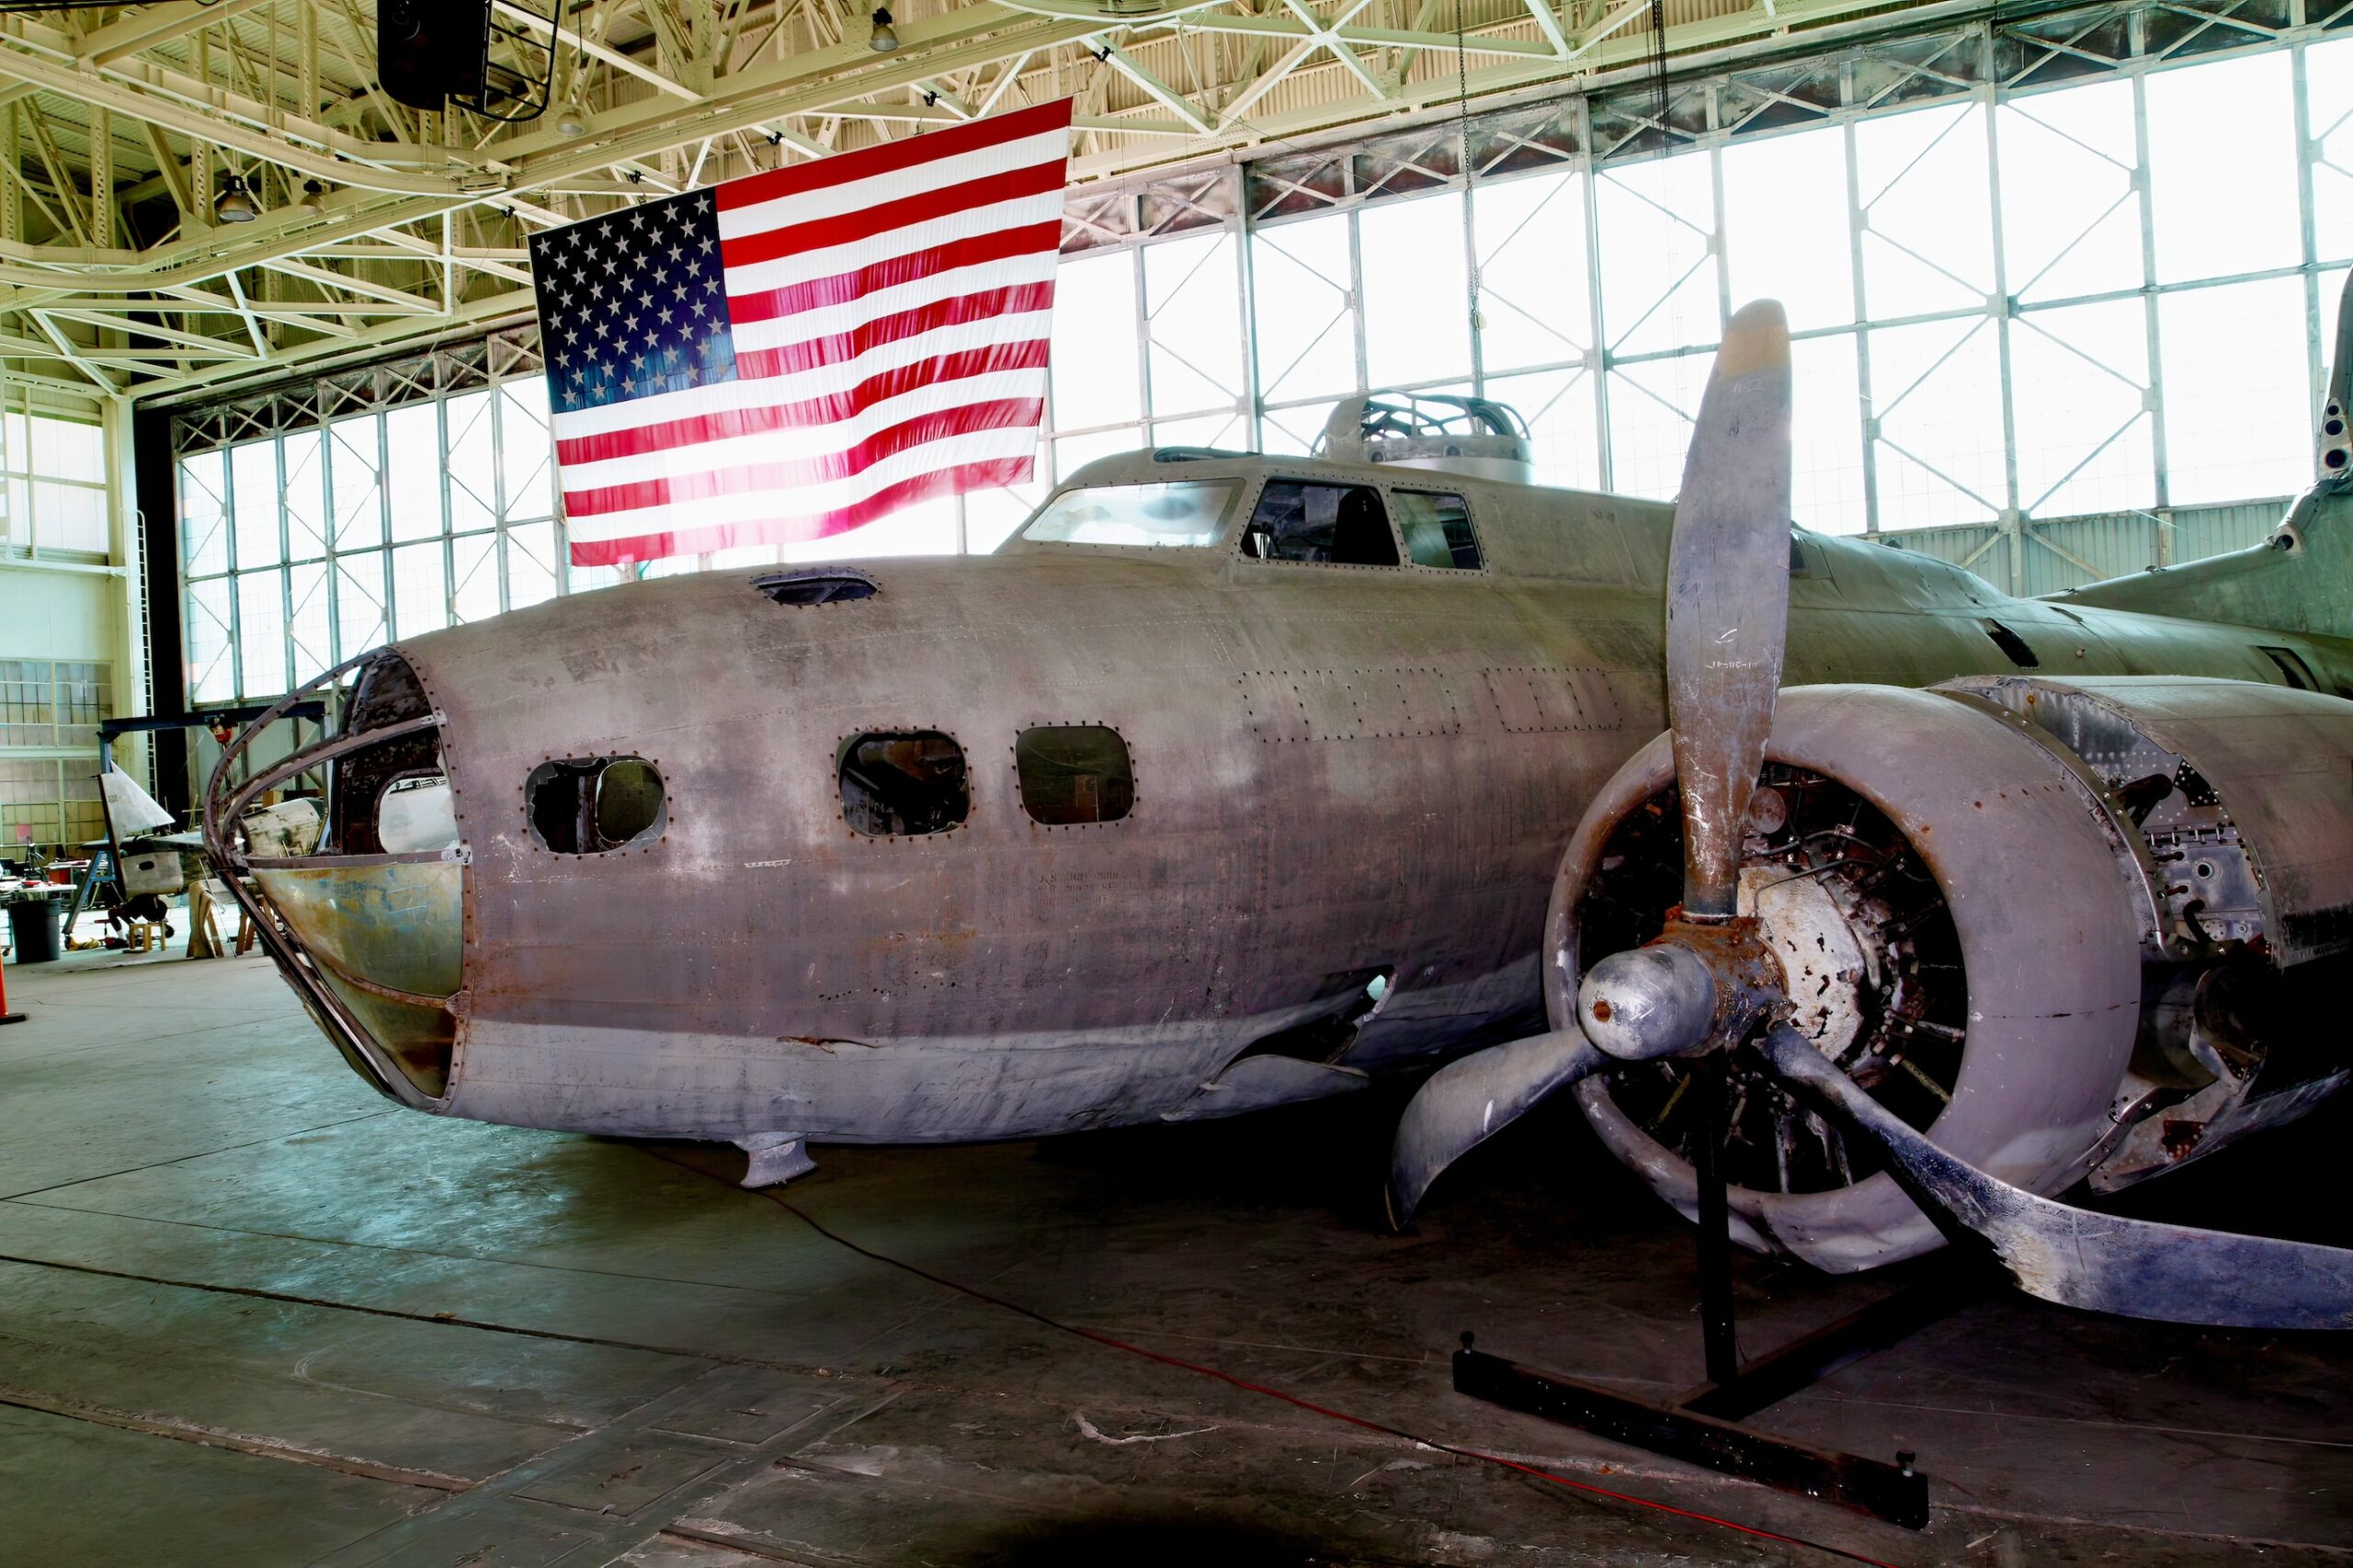 B-17 Swamp ghost restoration